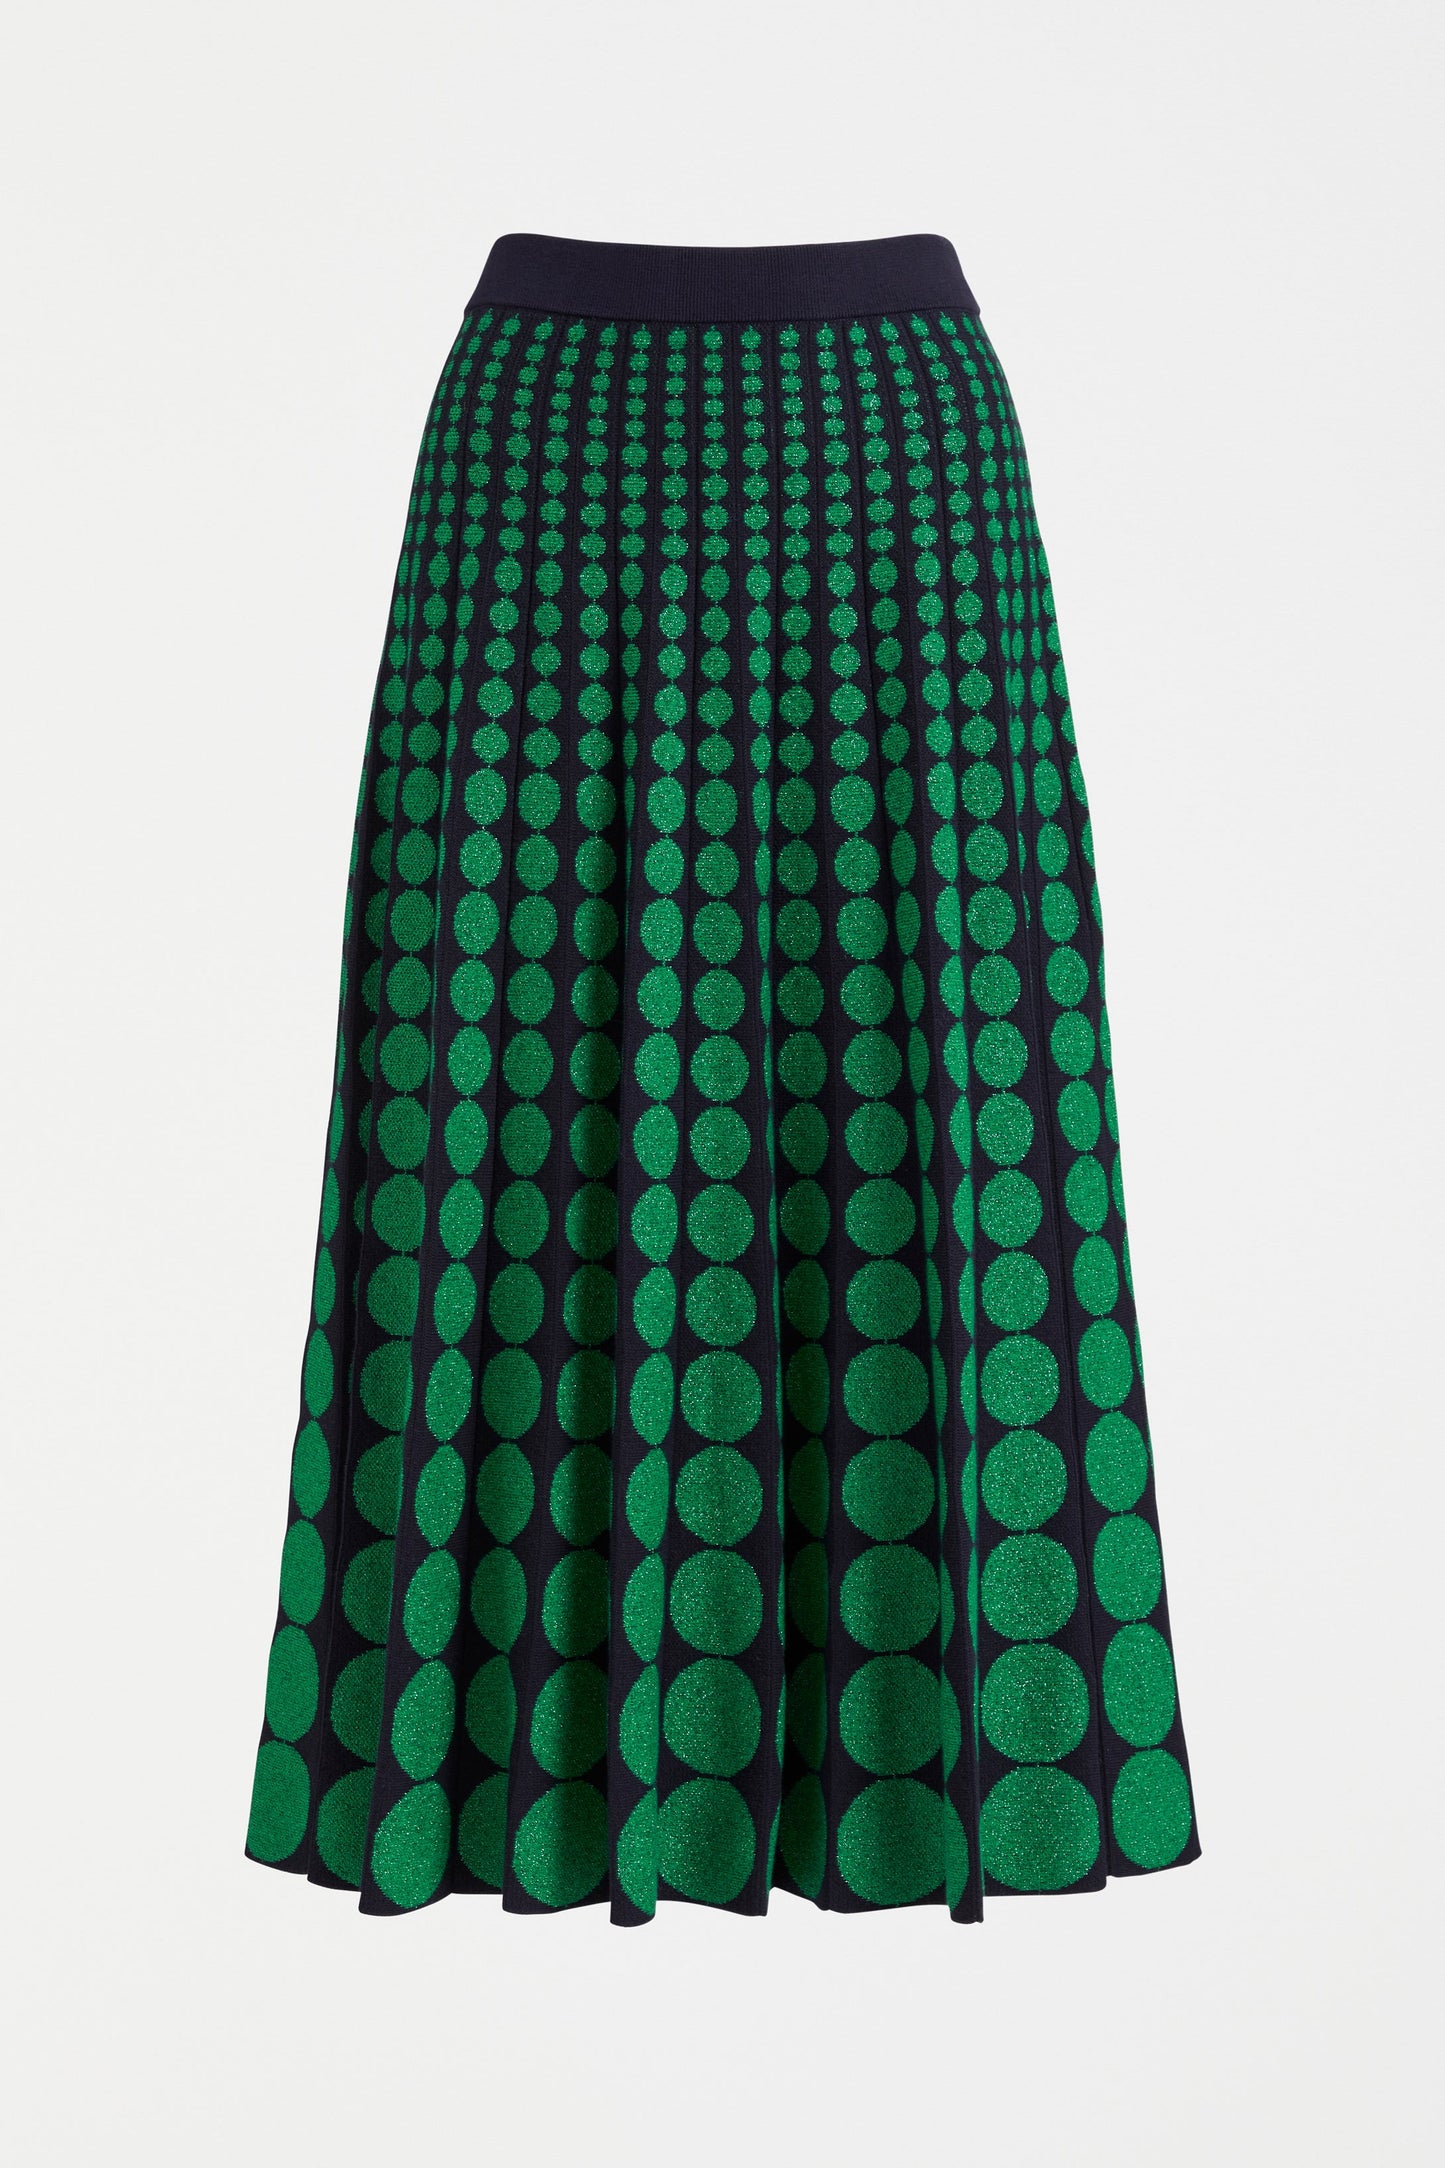 Leira A-Line Midi Metallic Knit Skirt with Circle Design Front| NAVY GREEN METALLIC